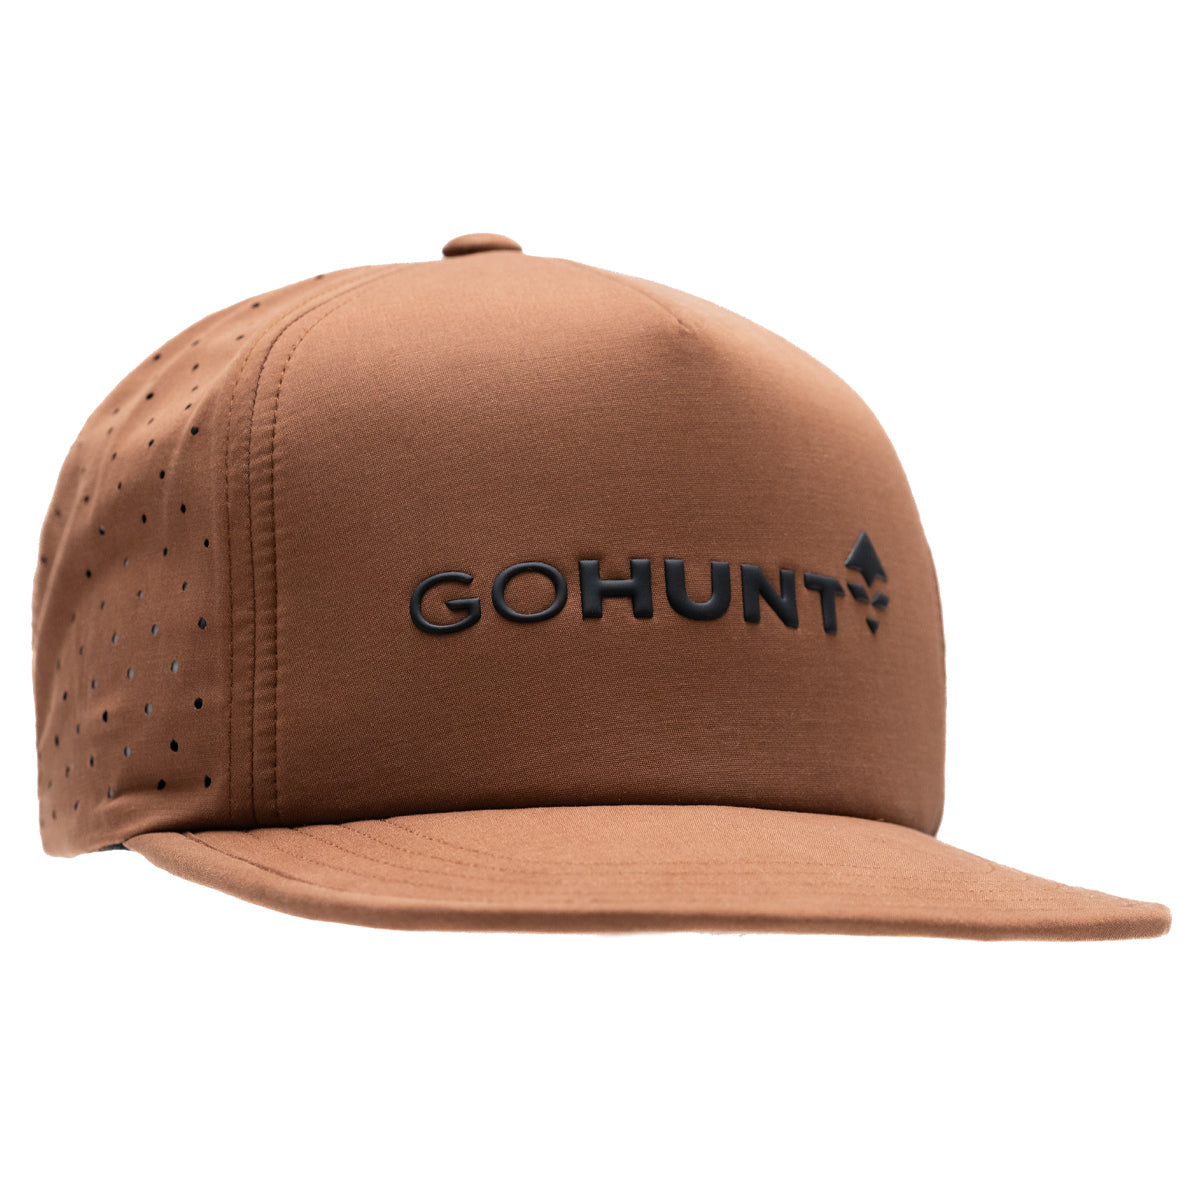 GOHUNT Air Raider in brown by GOHUNT | GOHUNT - GOHUNT Shop